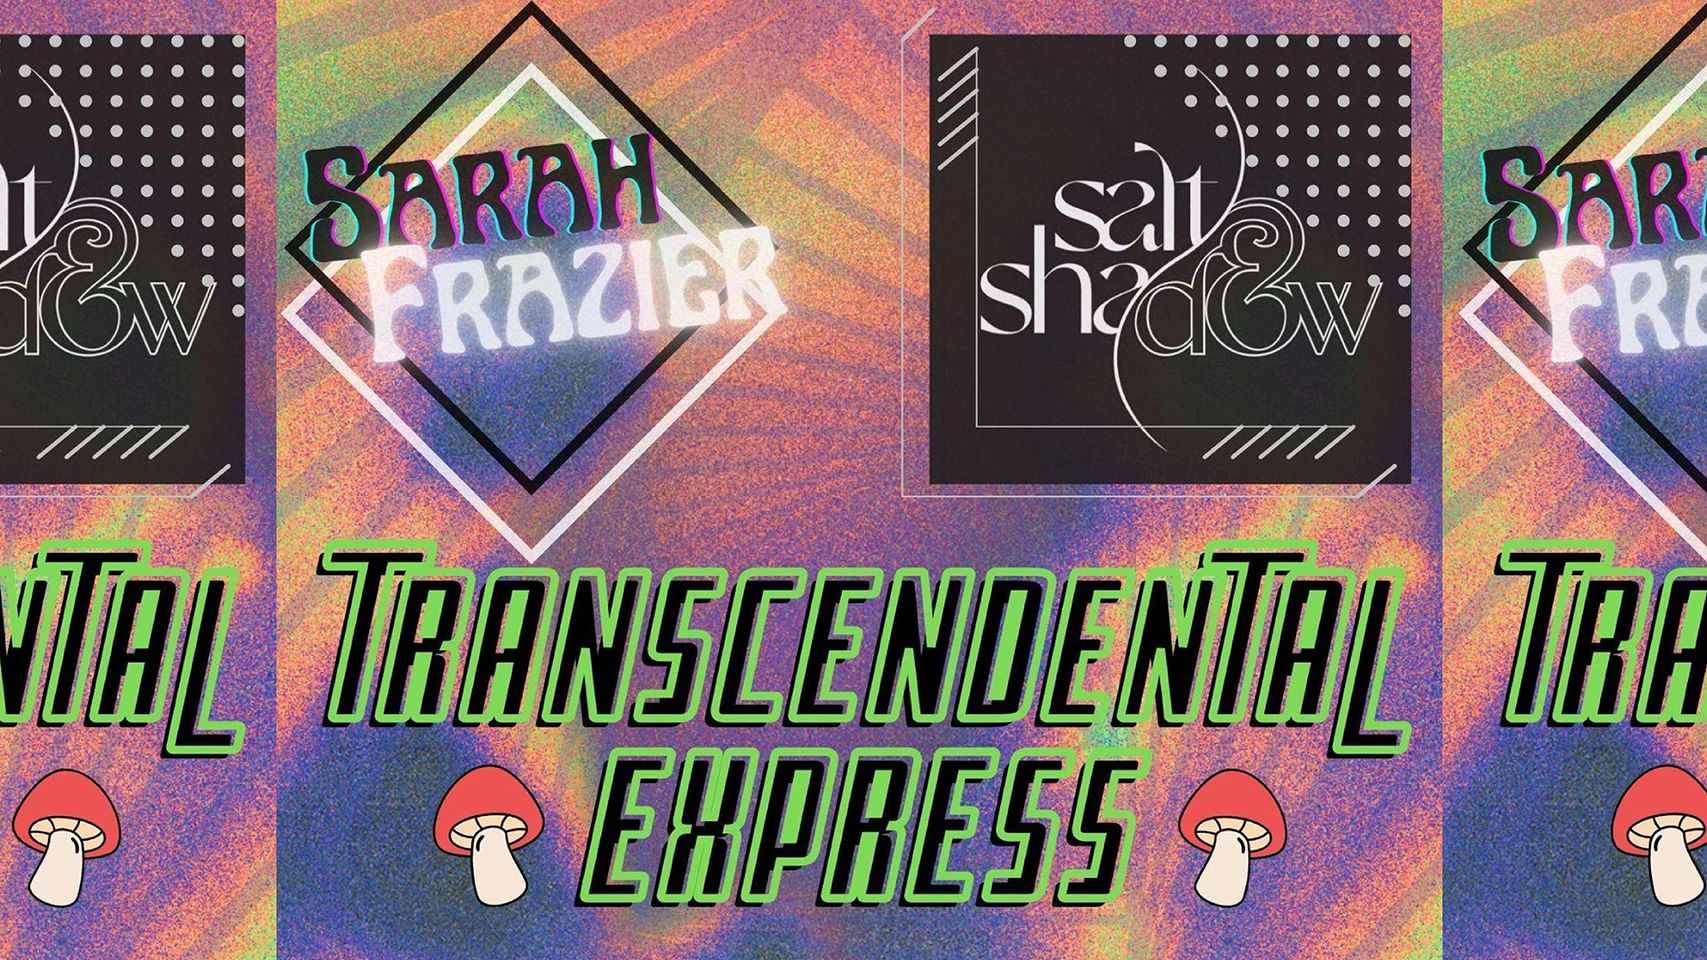 Salt & Shadow + Transcendental Express + Sarah Frazier